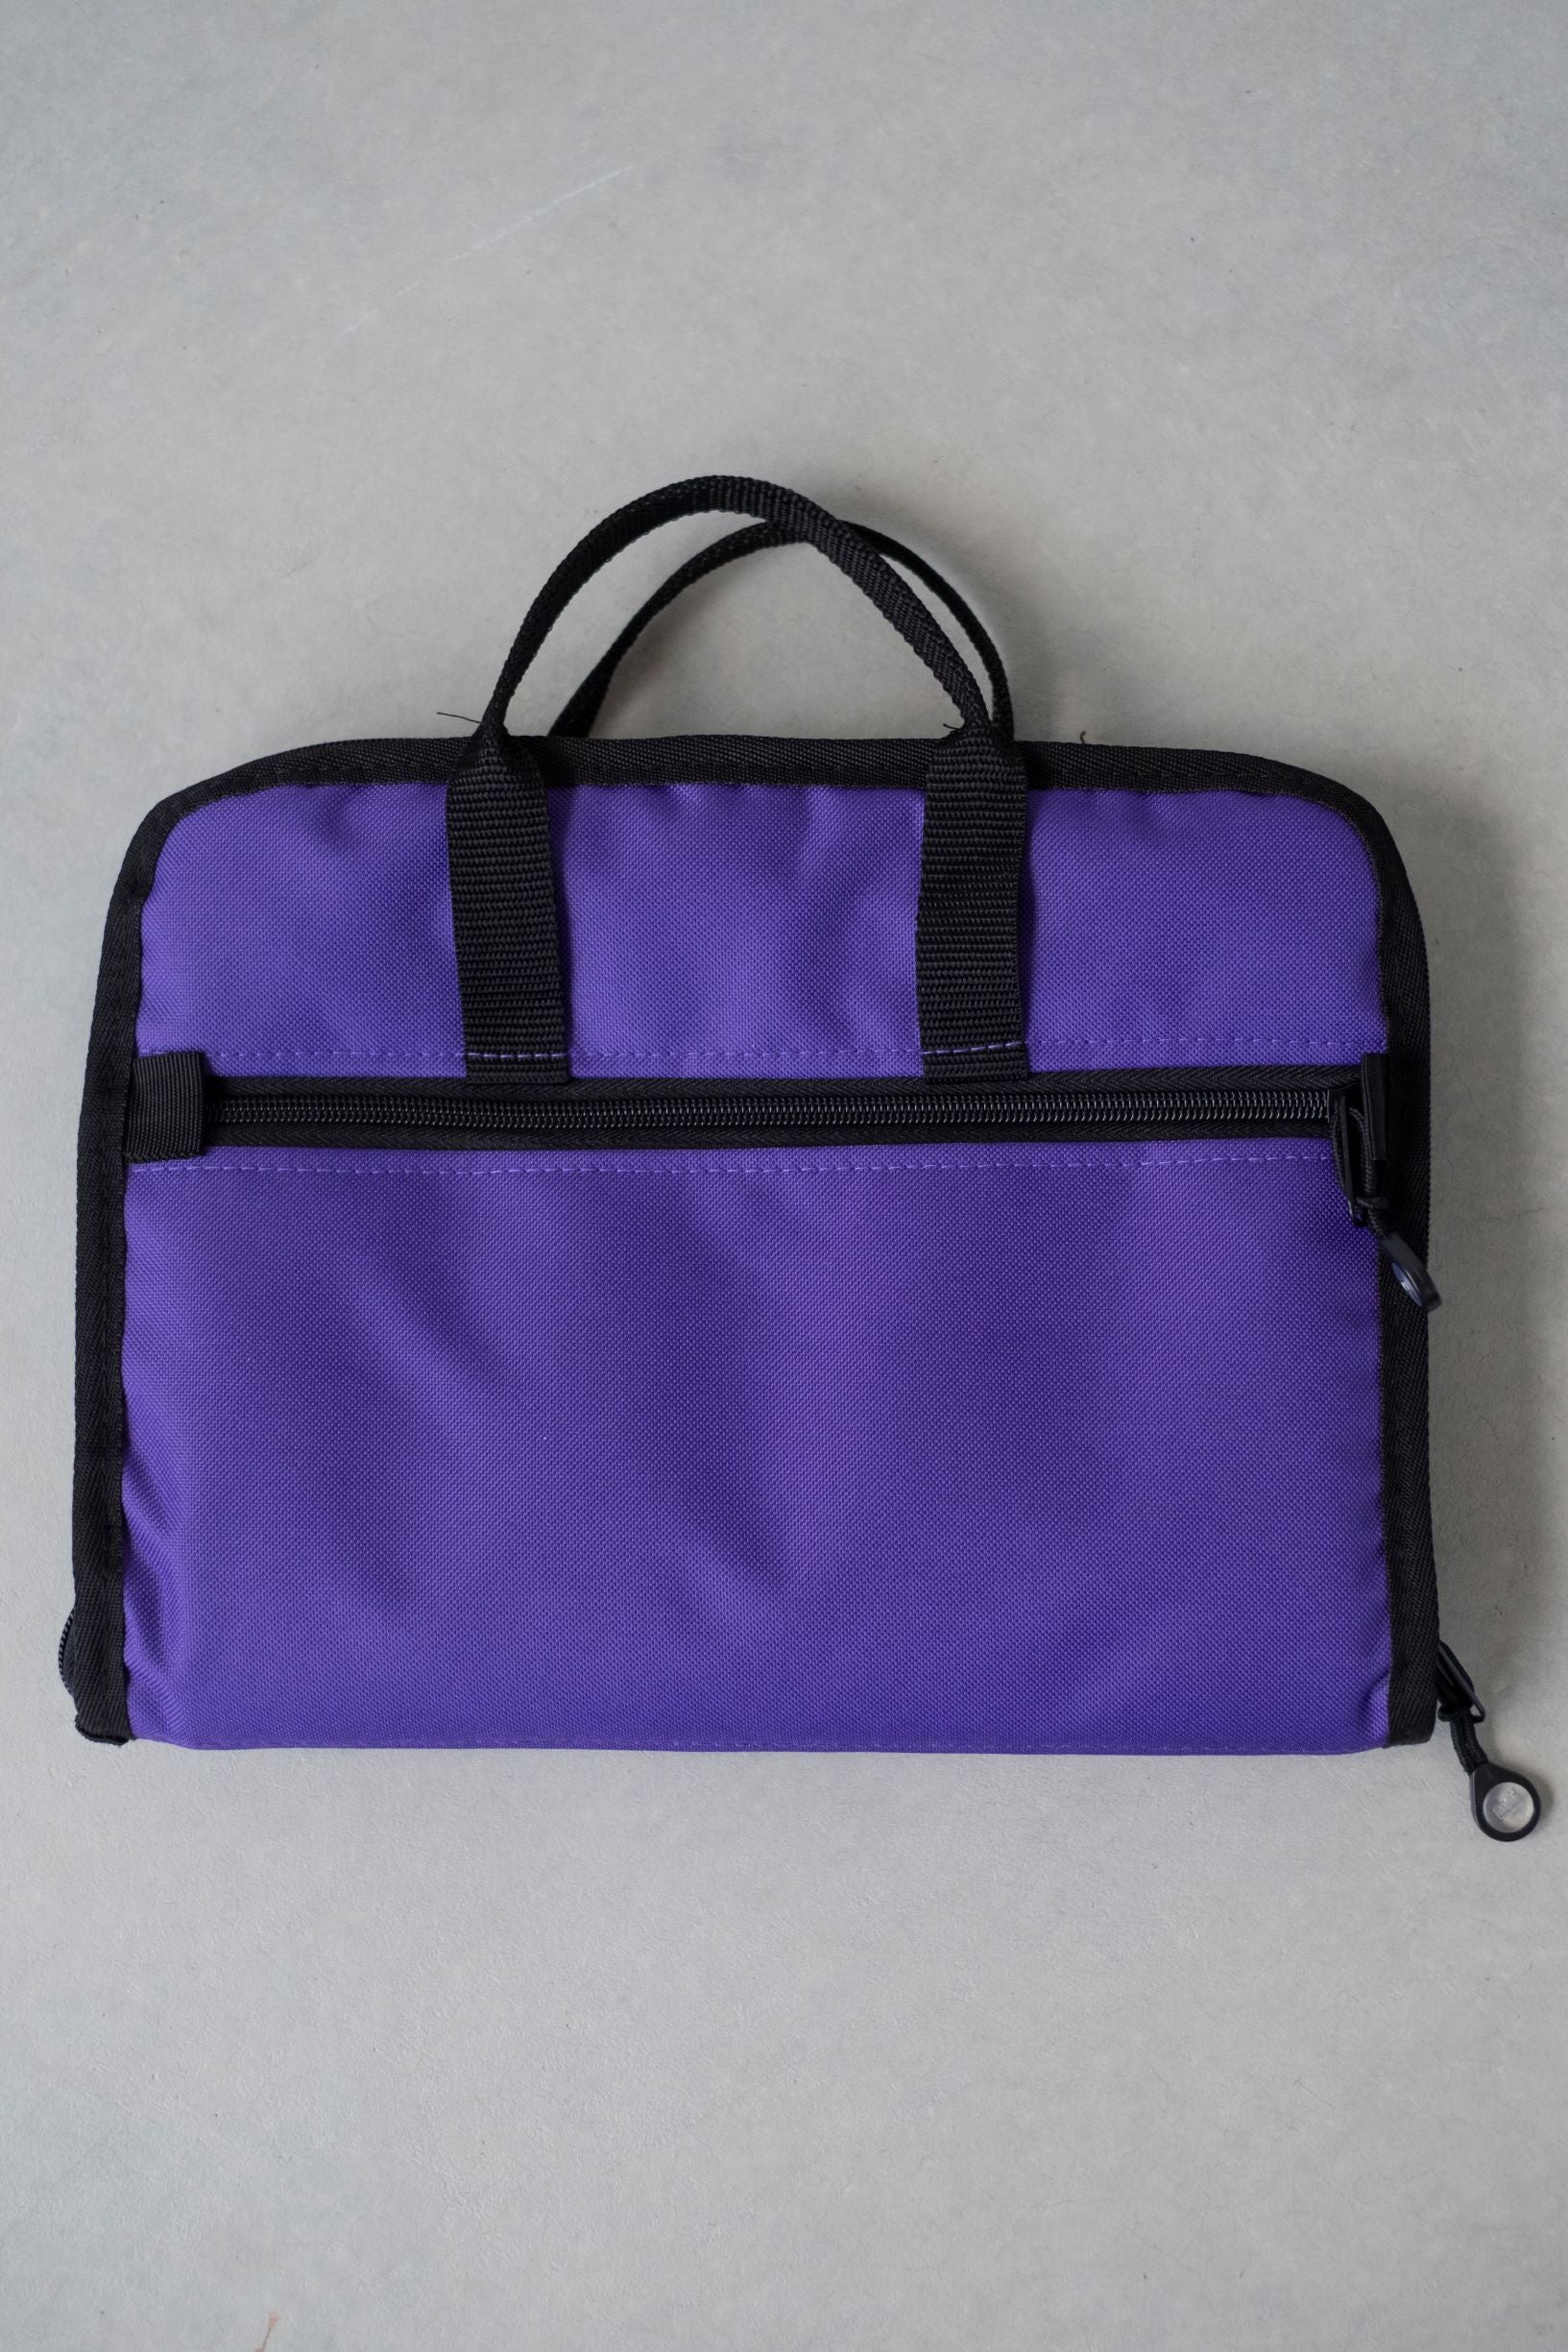 Purple Indigo Blue Geometric Art Messenger Bag, Magnetic Closure,  Interchangeable Snap-On Flap - Intuition - Primal Painter